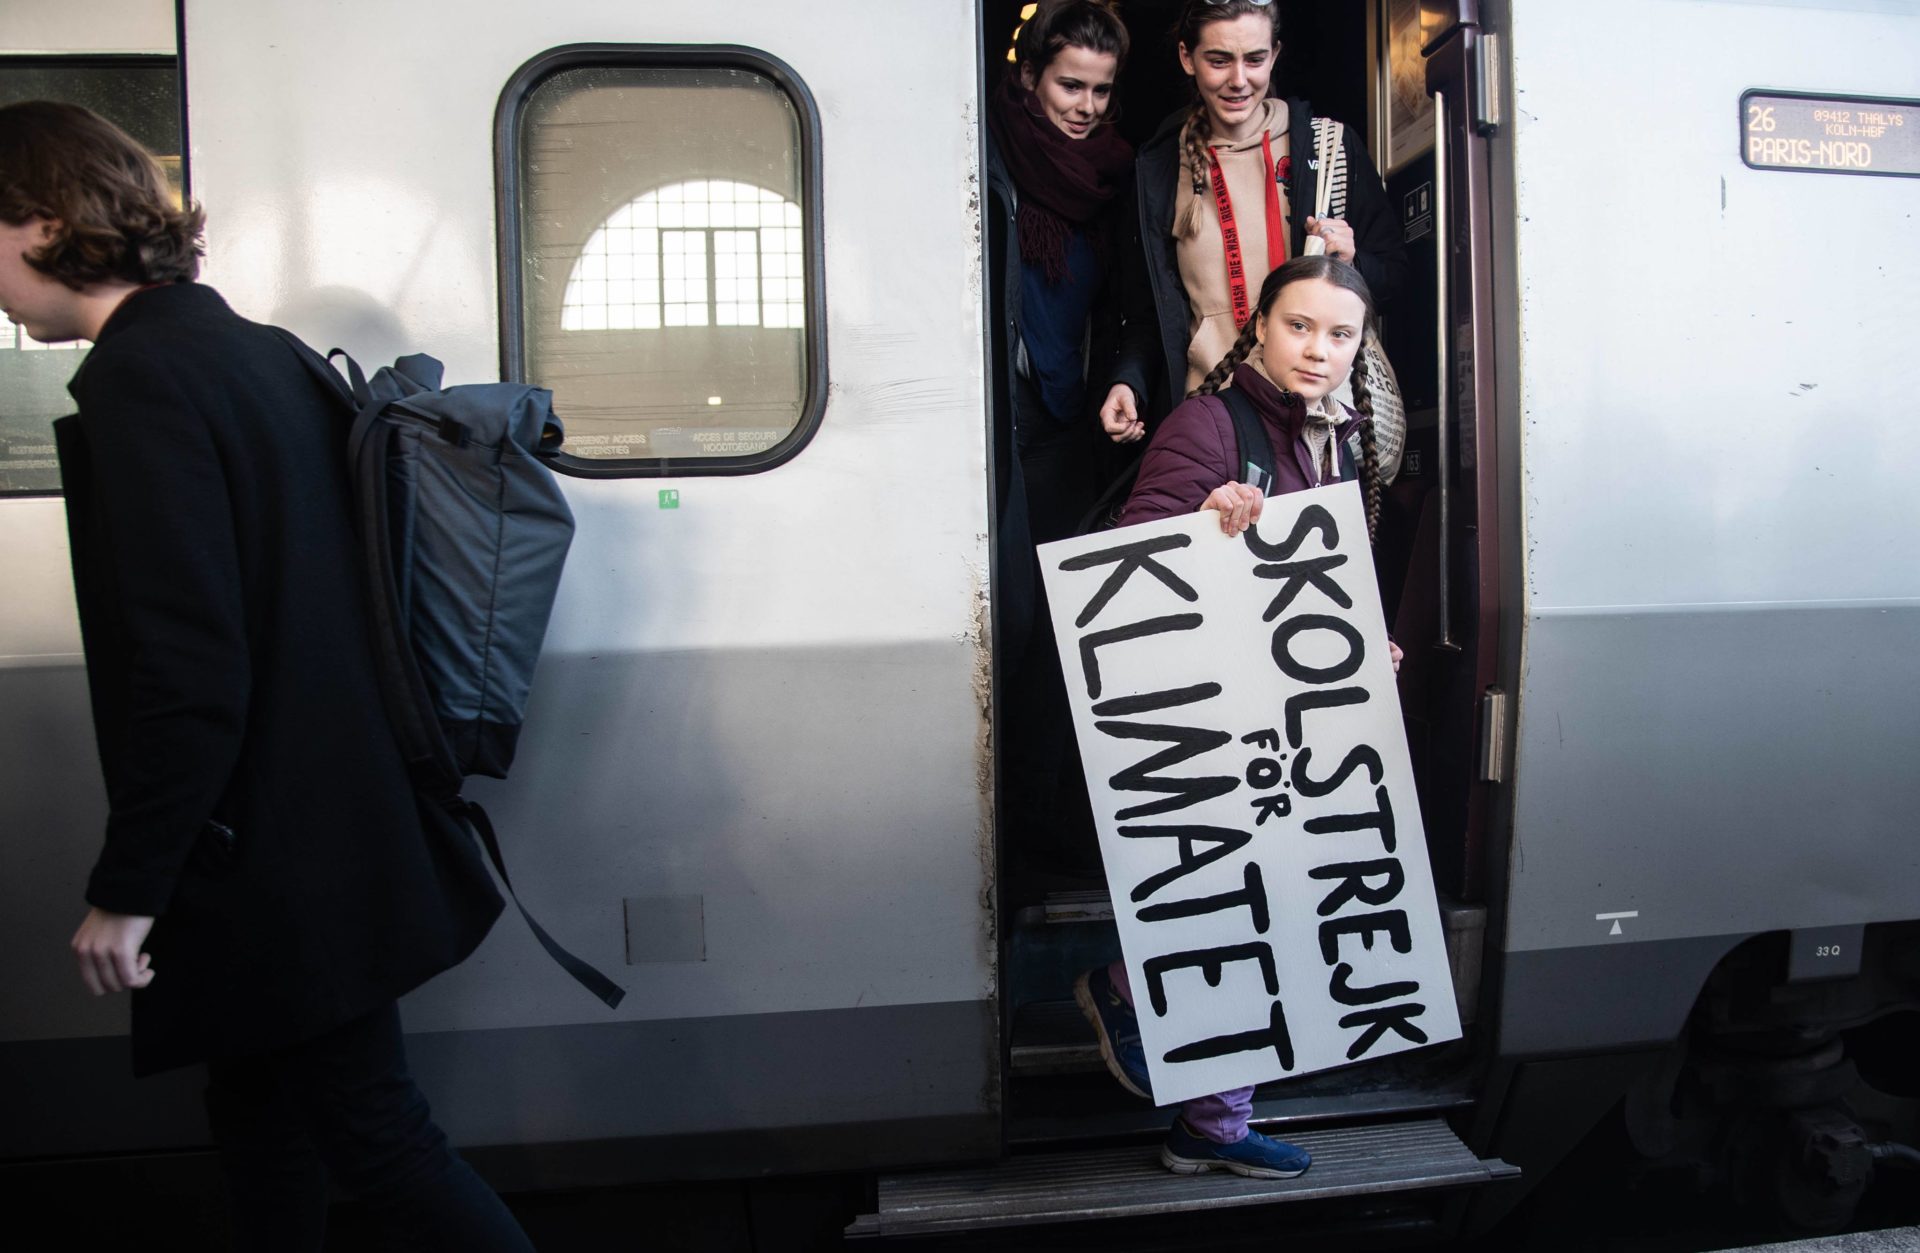 Greta Thunberg arrives in Paris by train